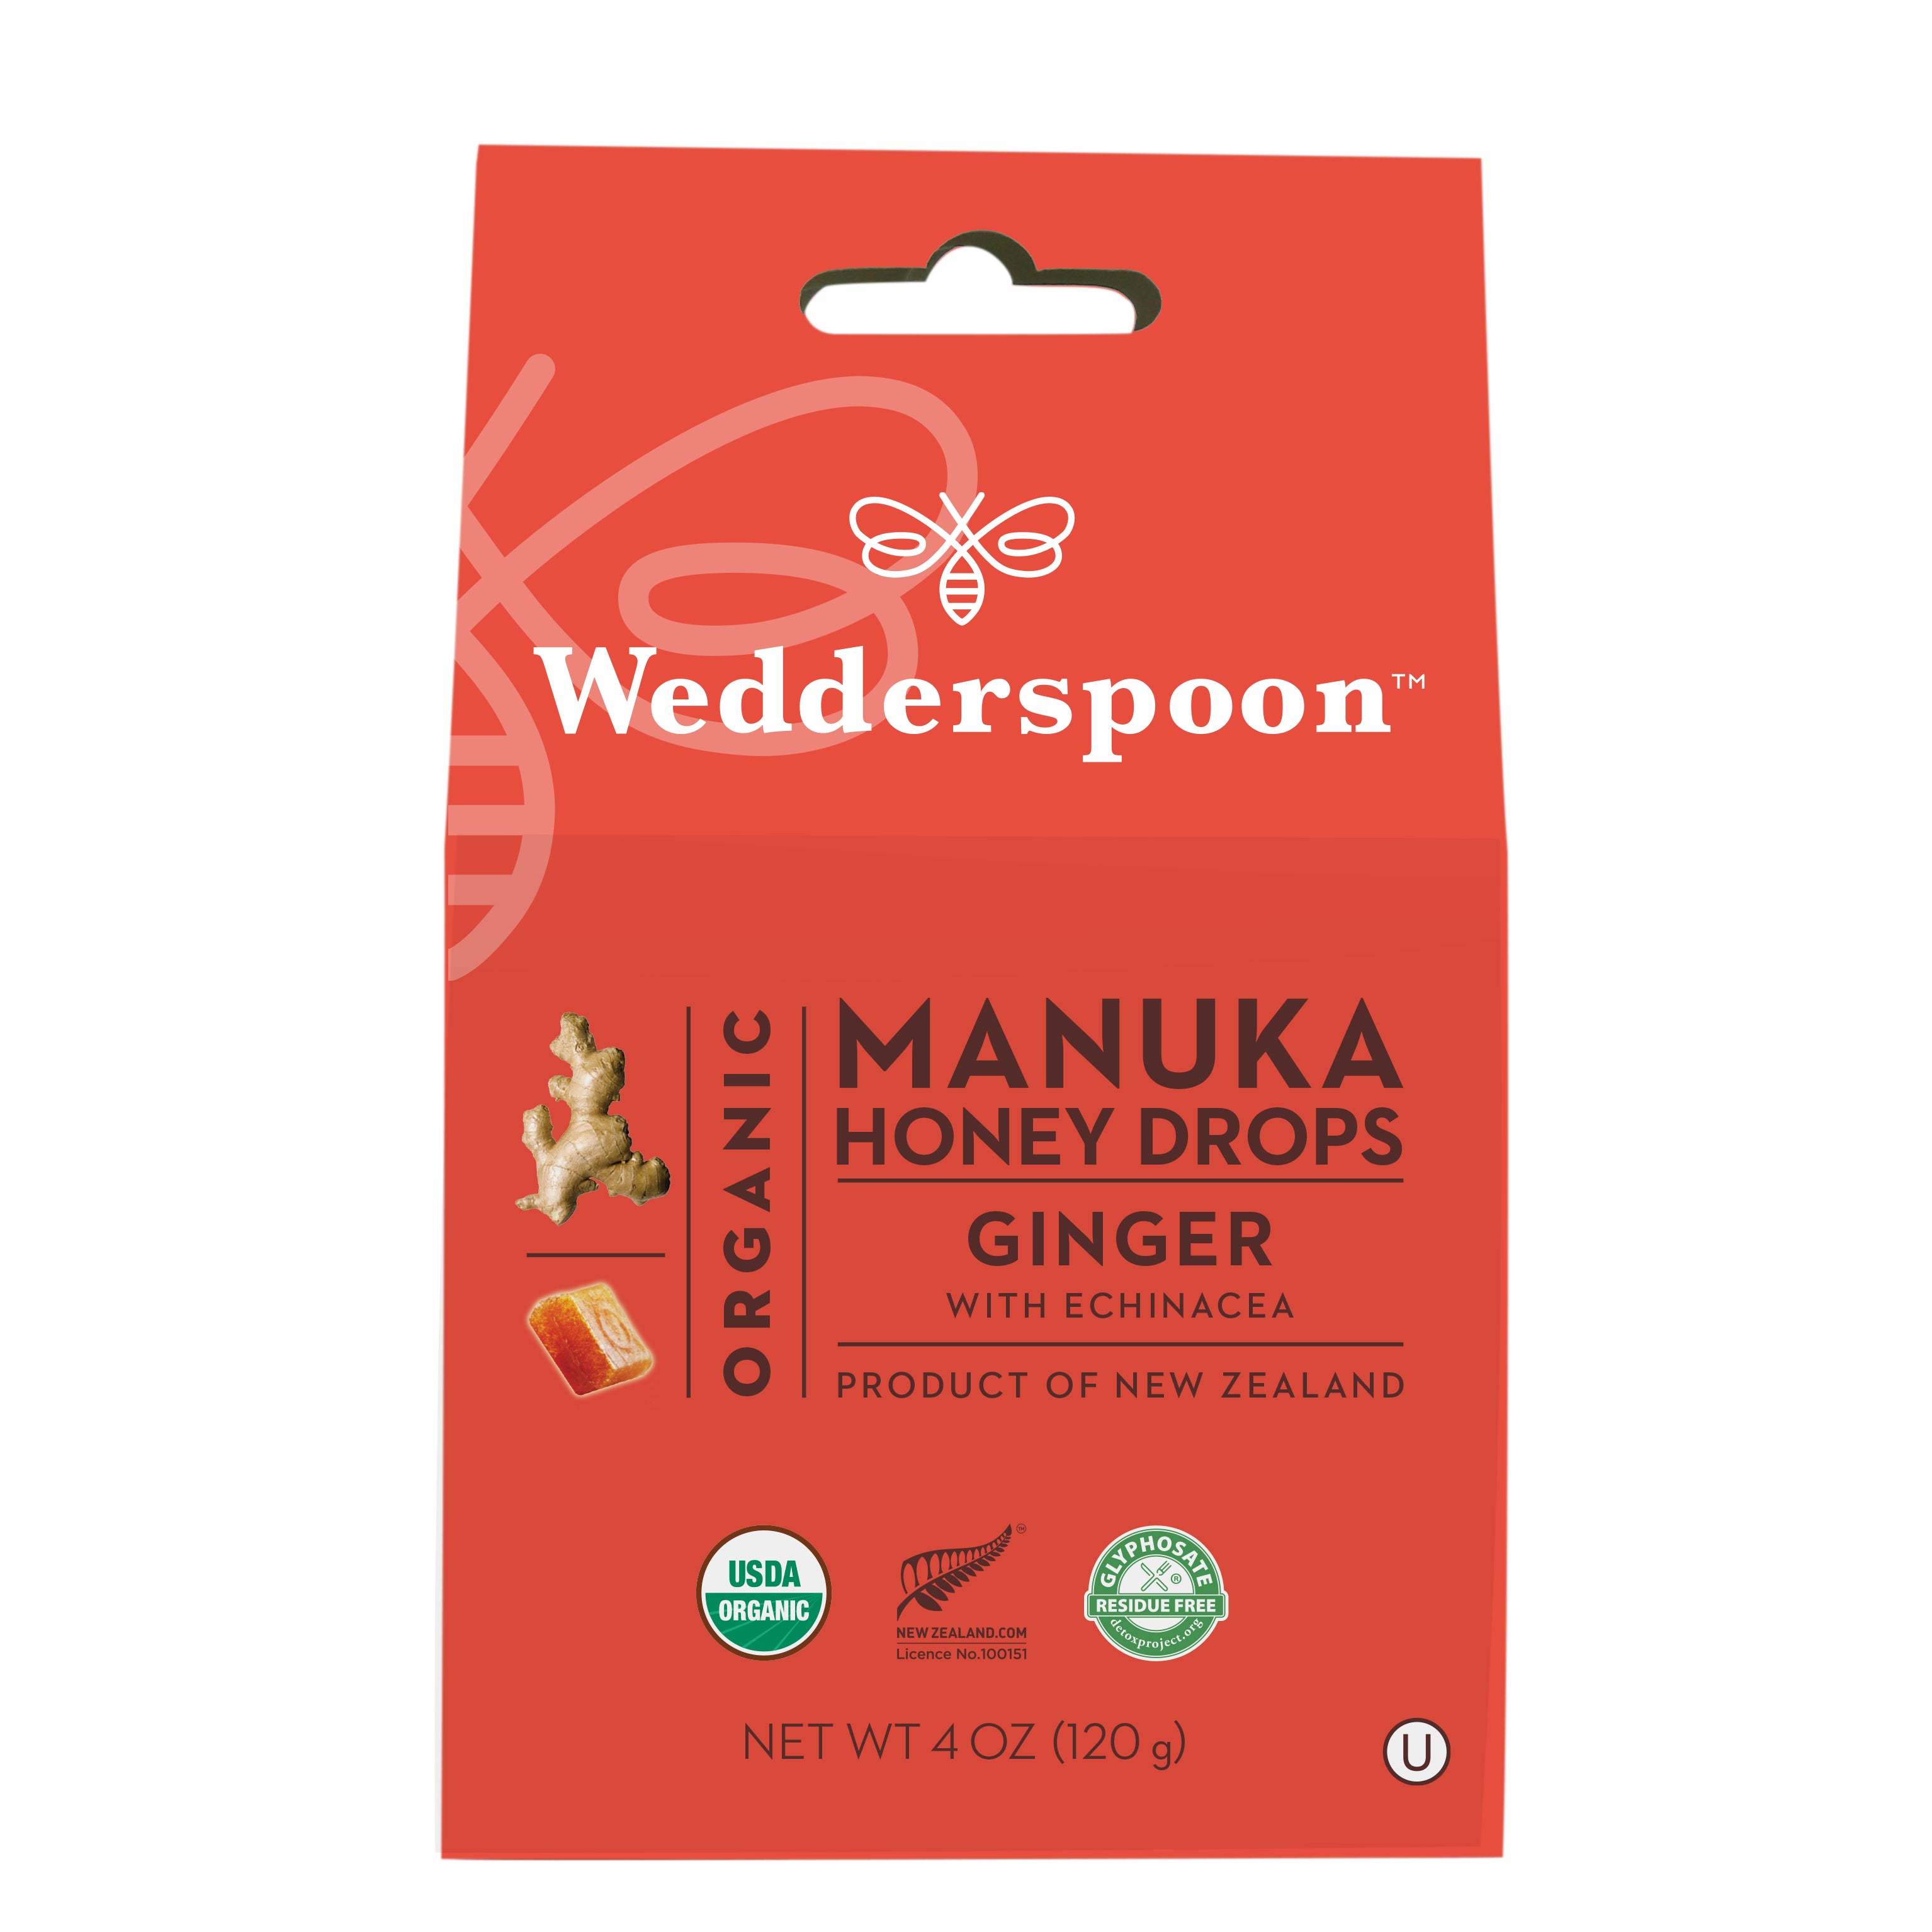 Wedderspoon Manuka Honey Drops Ginger